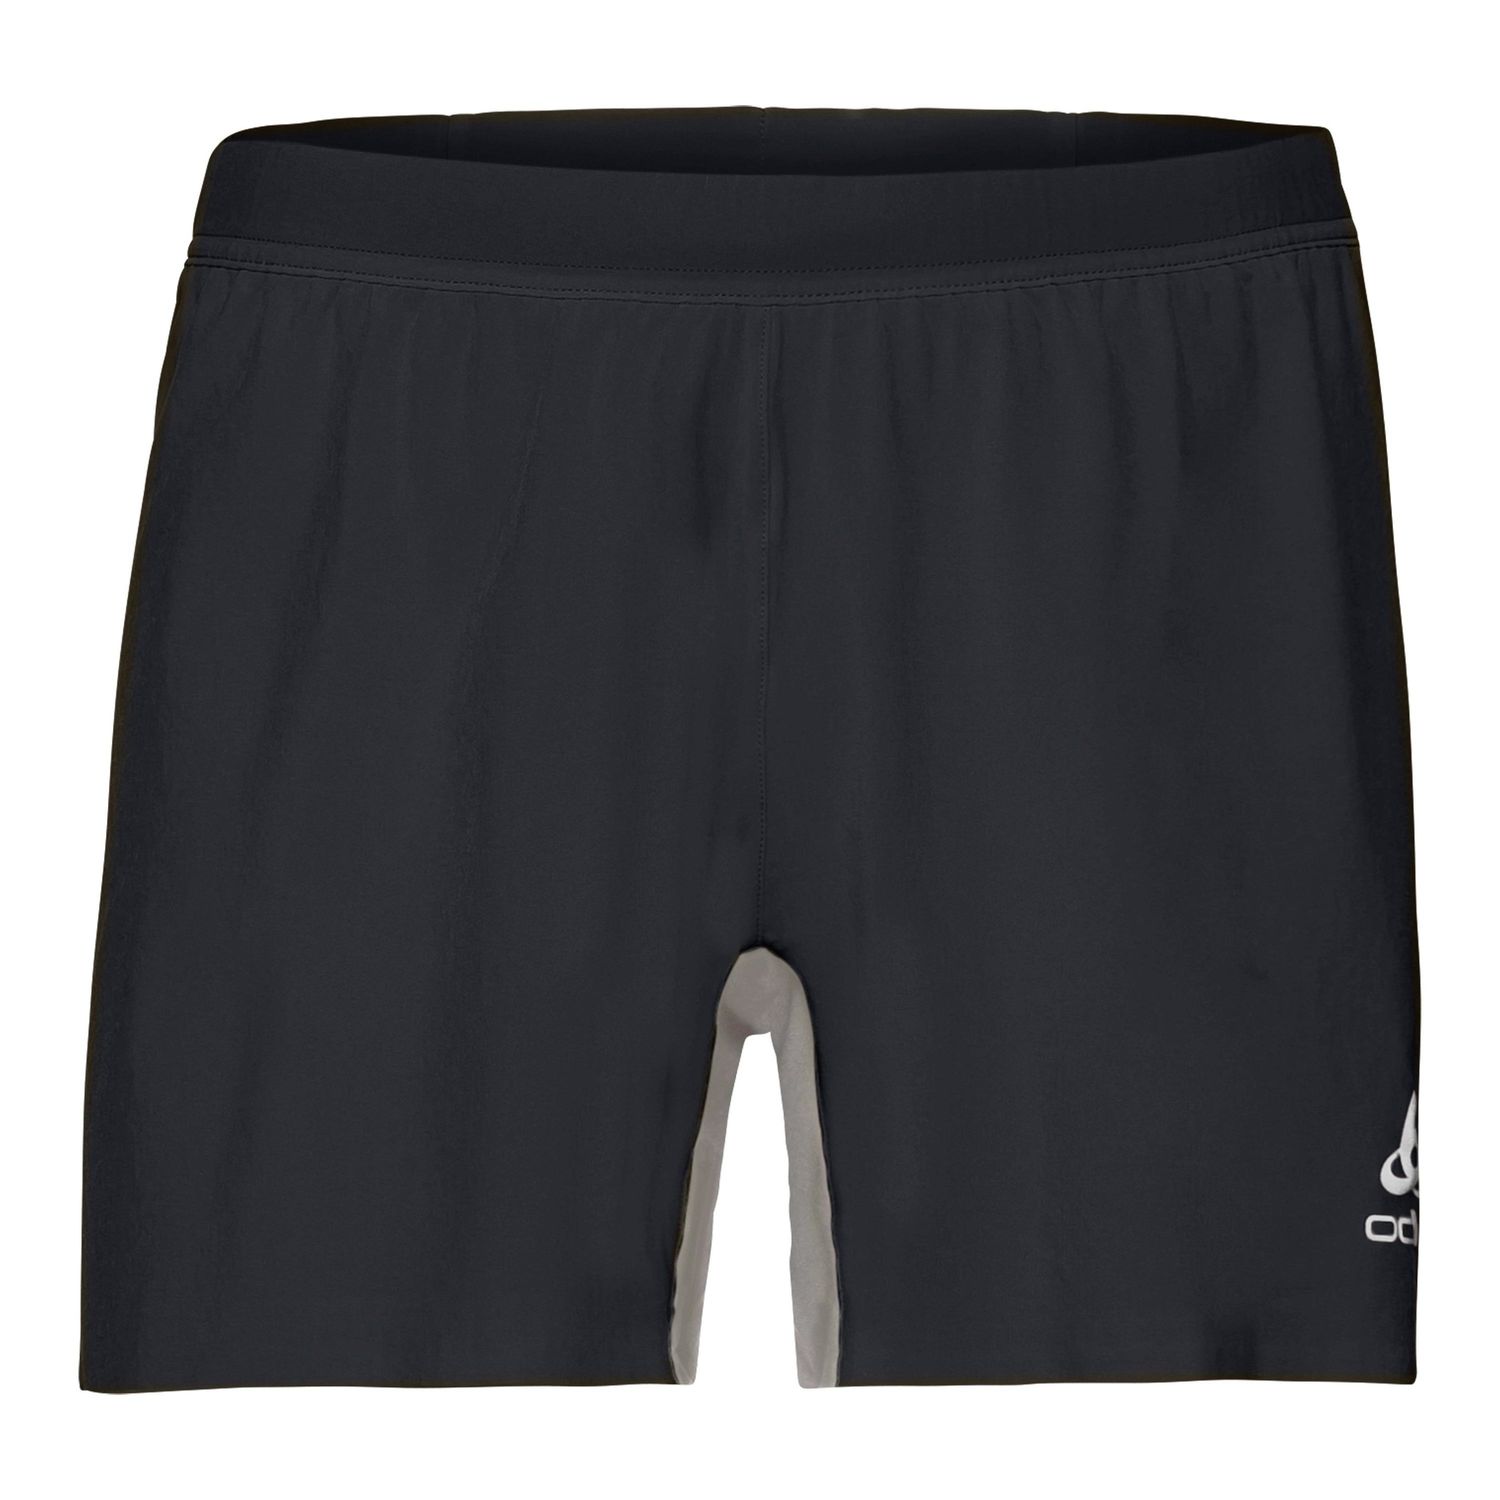 Odlo - Shorts Zeroweight X- Shorts - Men's